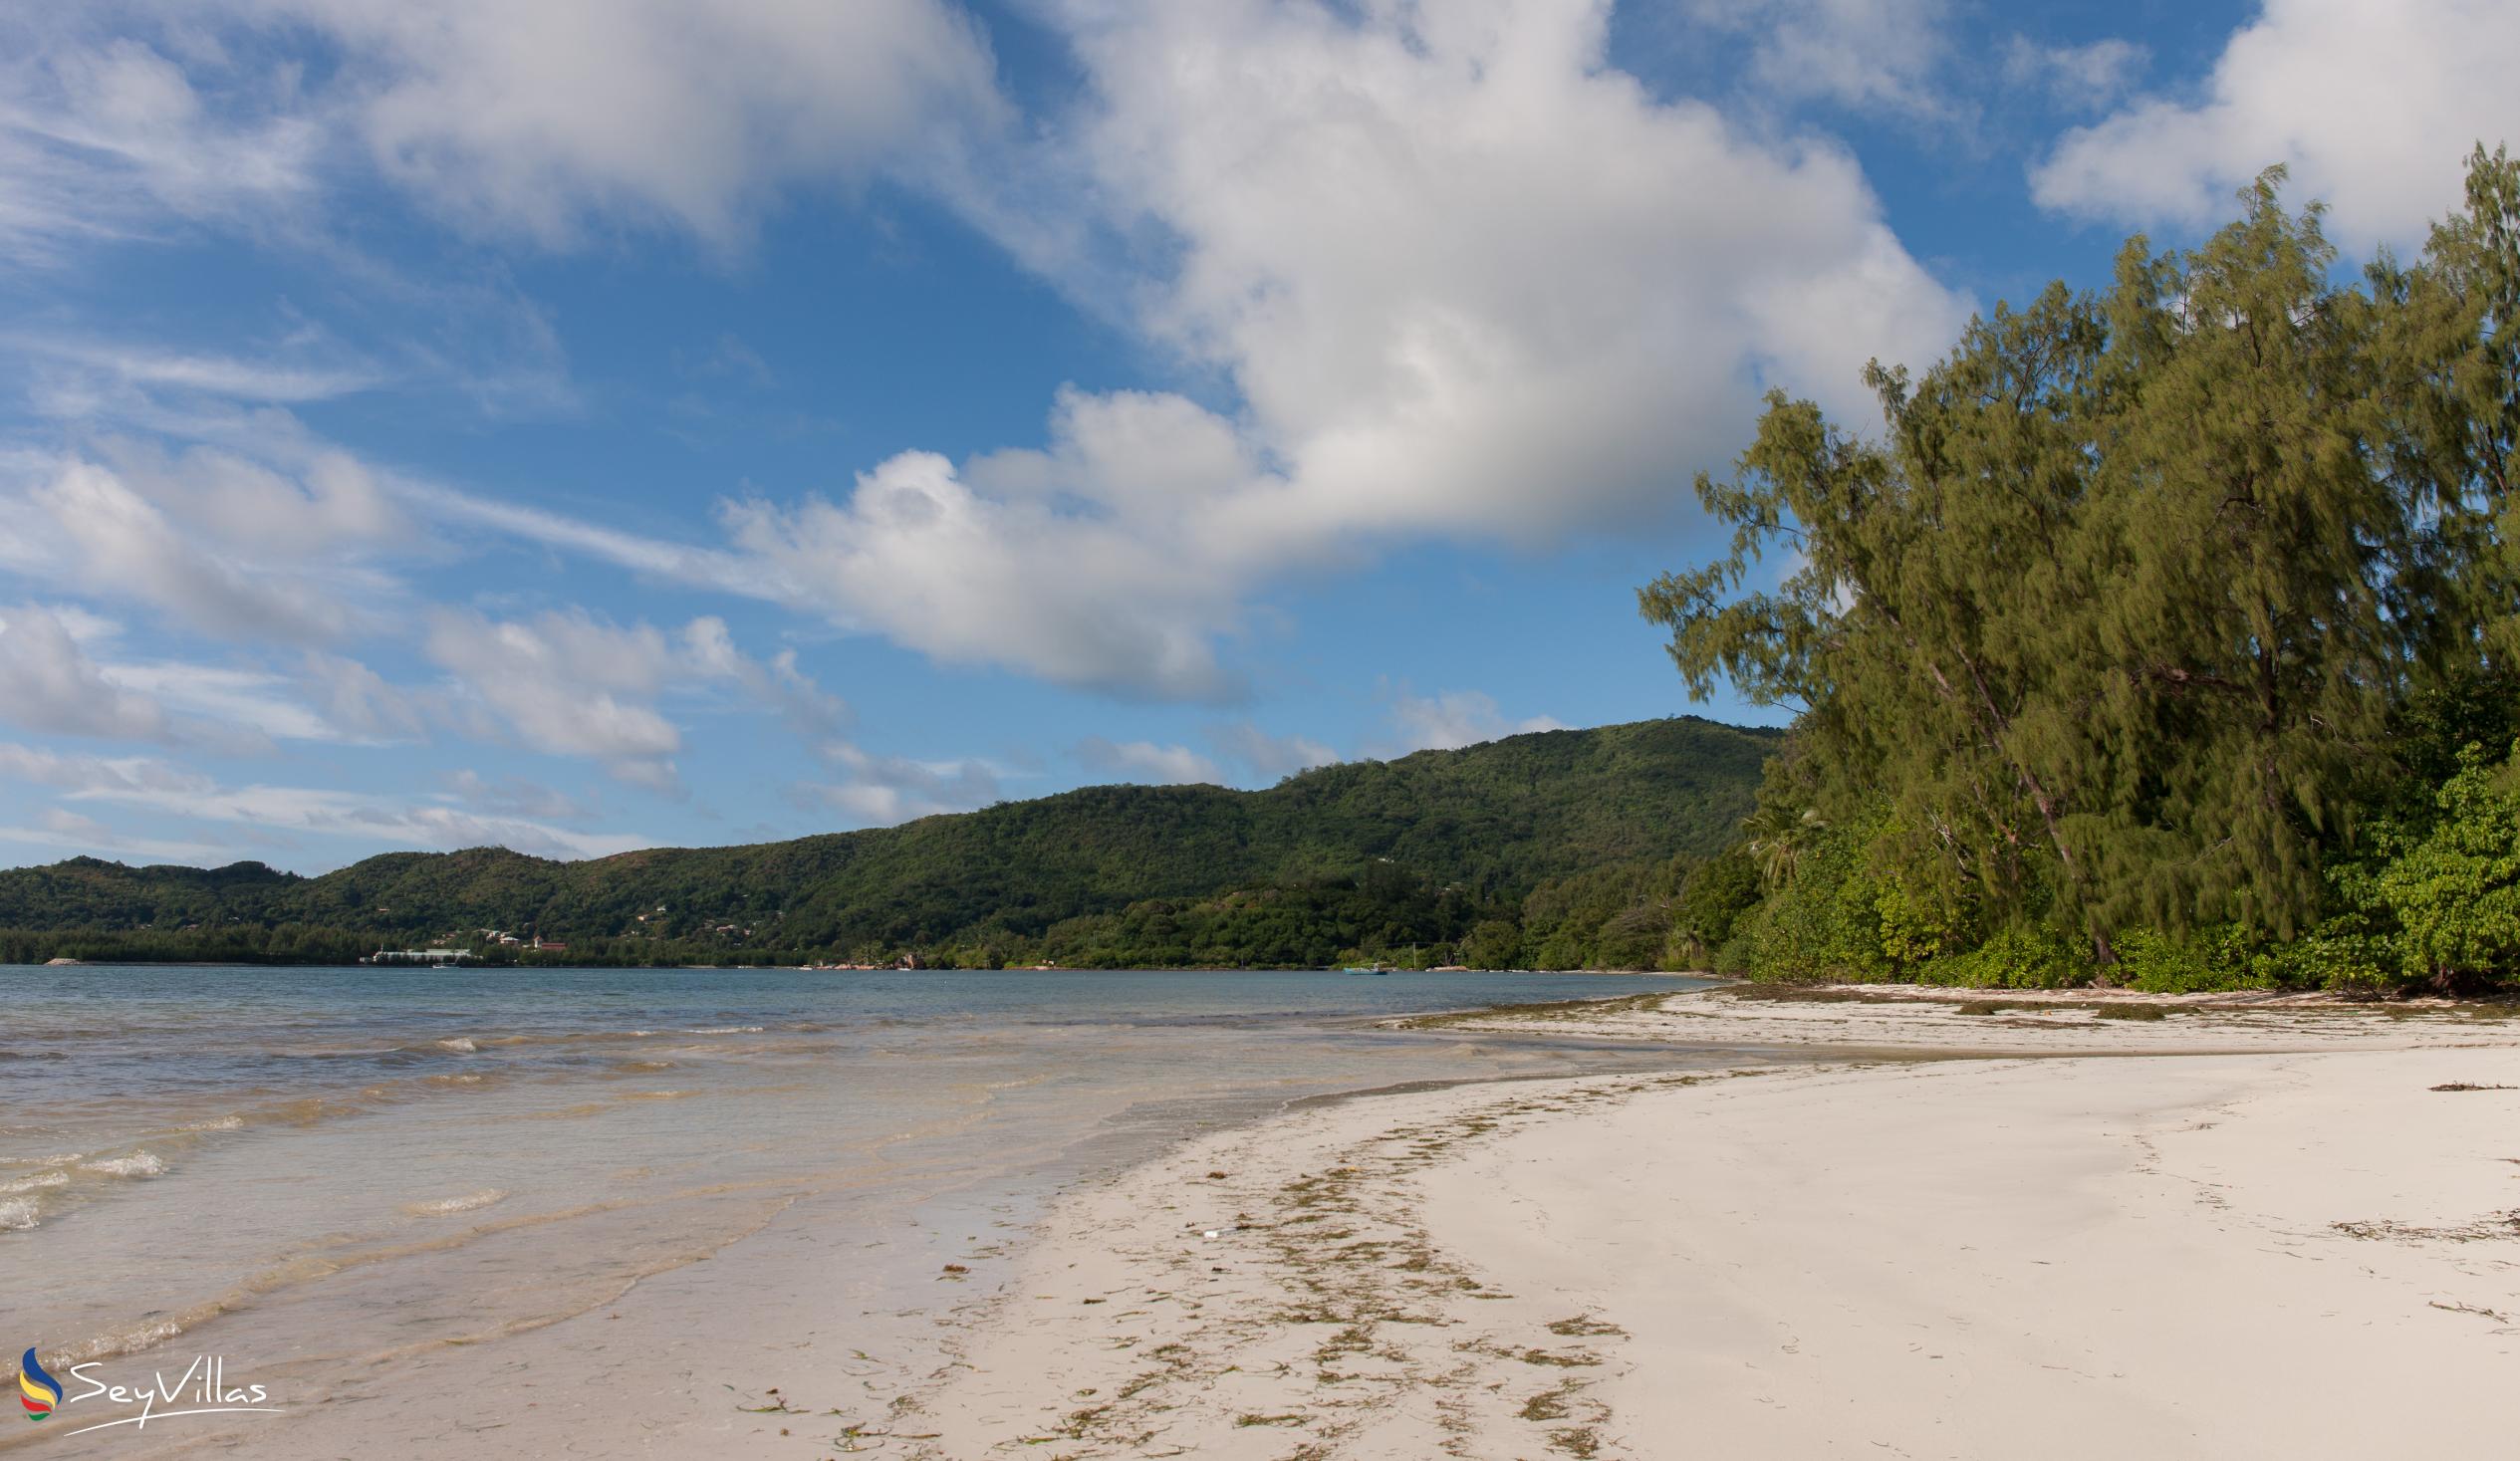 Photo 1: Anse Madge - Praslin (Seychelles)